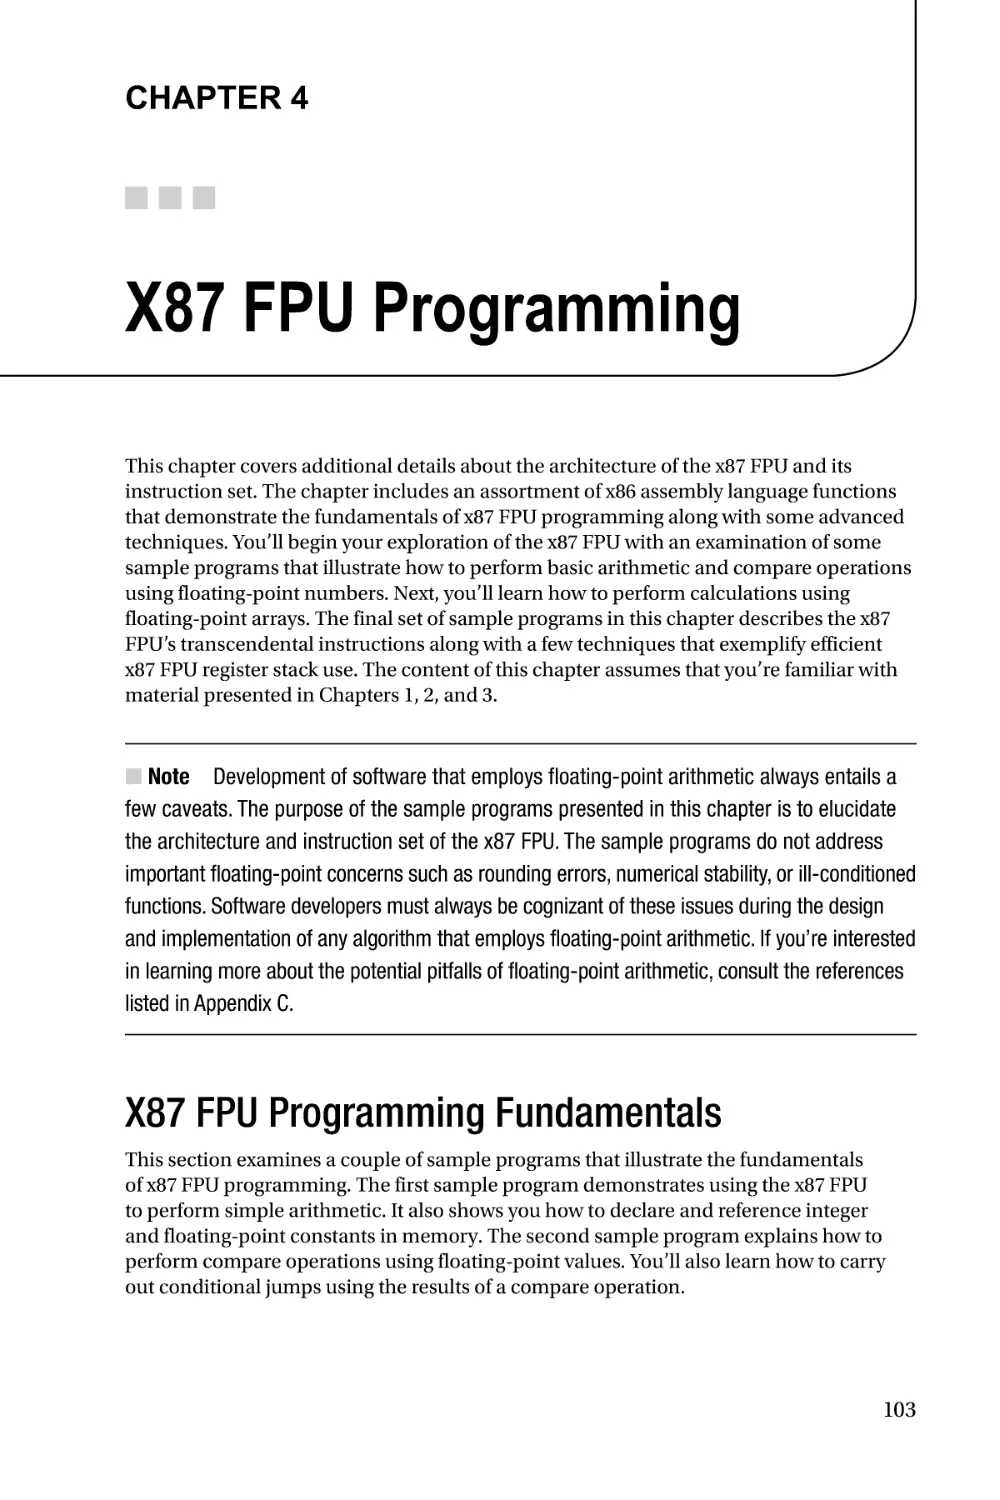 Chapter 4
X87 FPU Programming Fundamentals